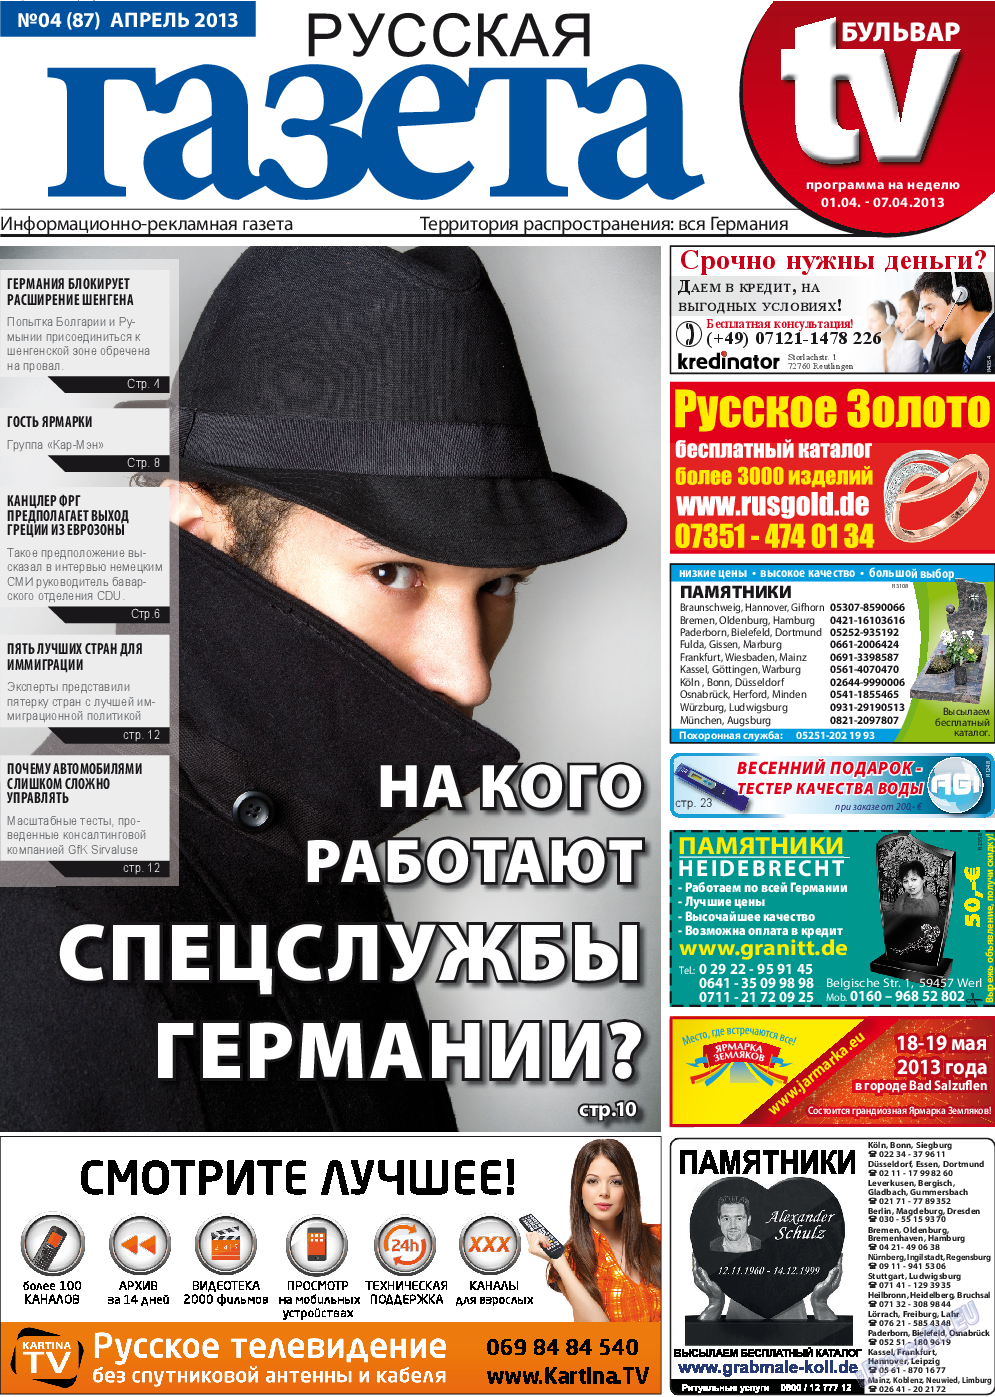 Русская Газета, газета. 2013 №4 стр.1